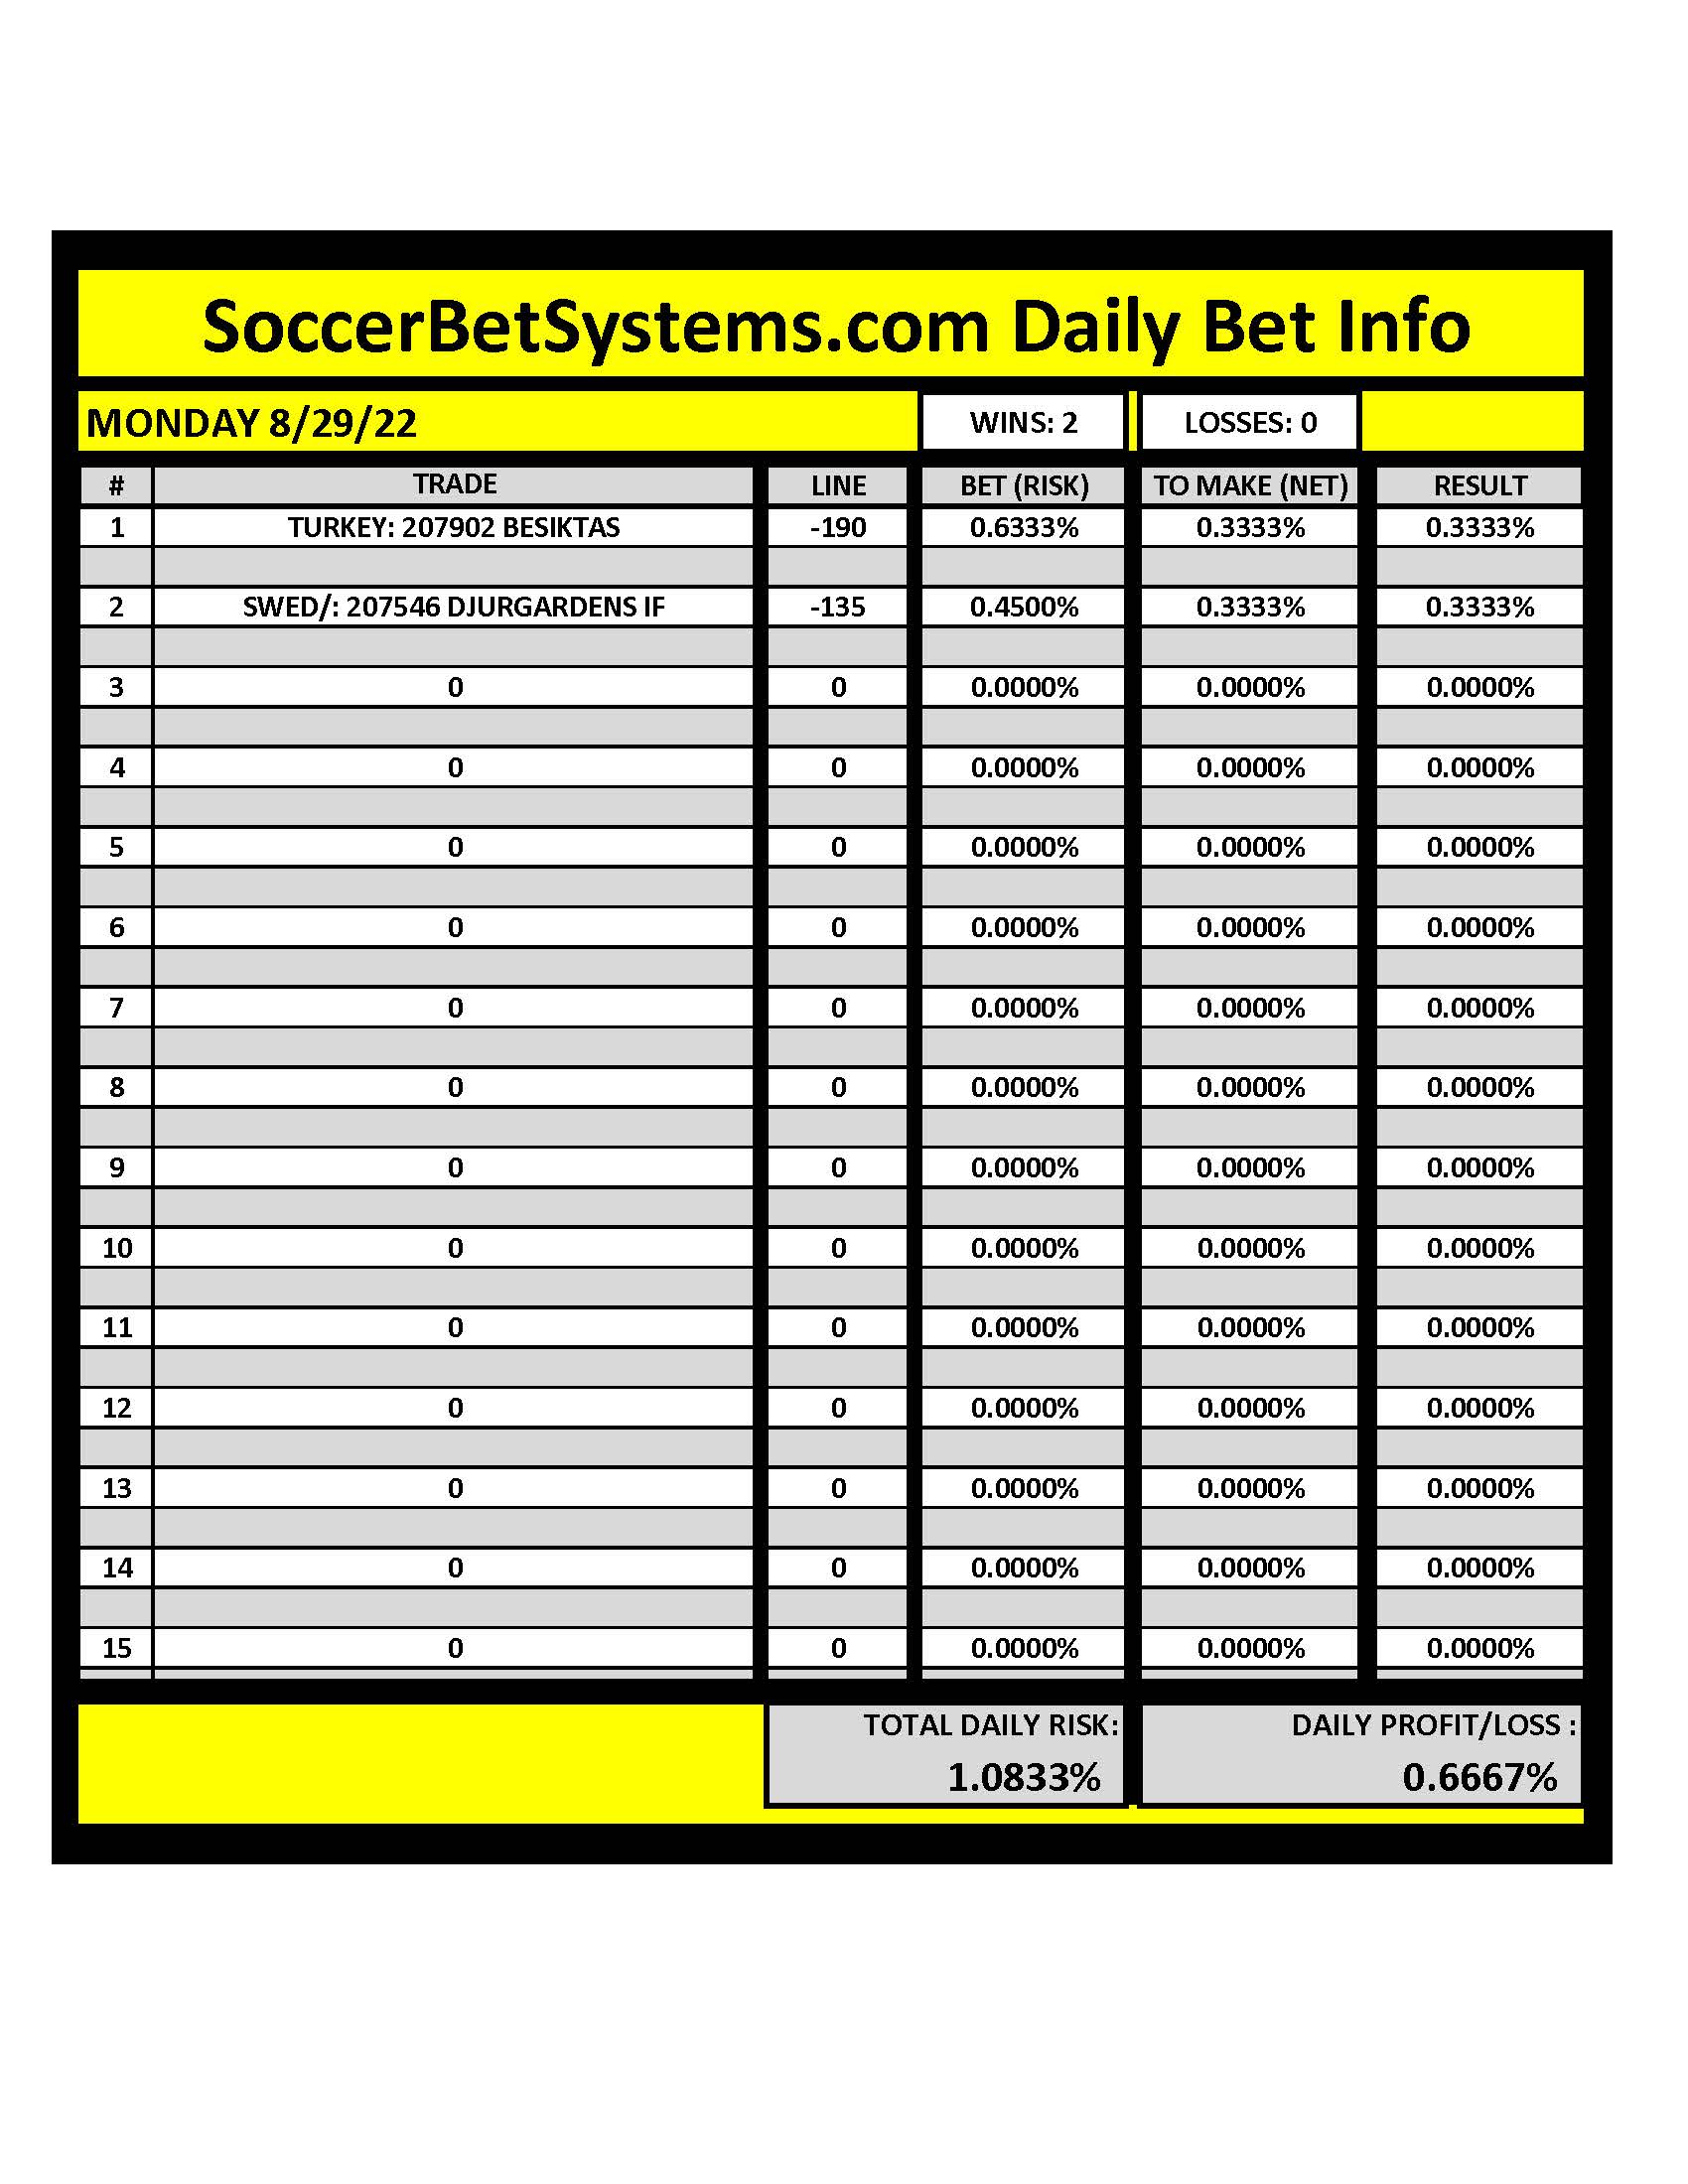 SoccerBetSystems.com 8/29/22 Daily Results